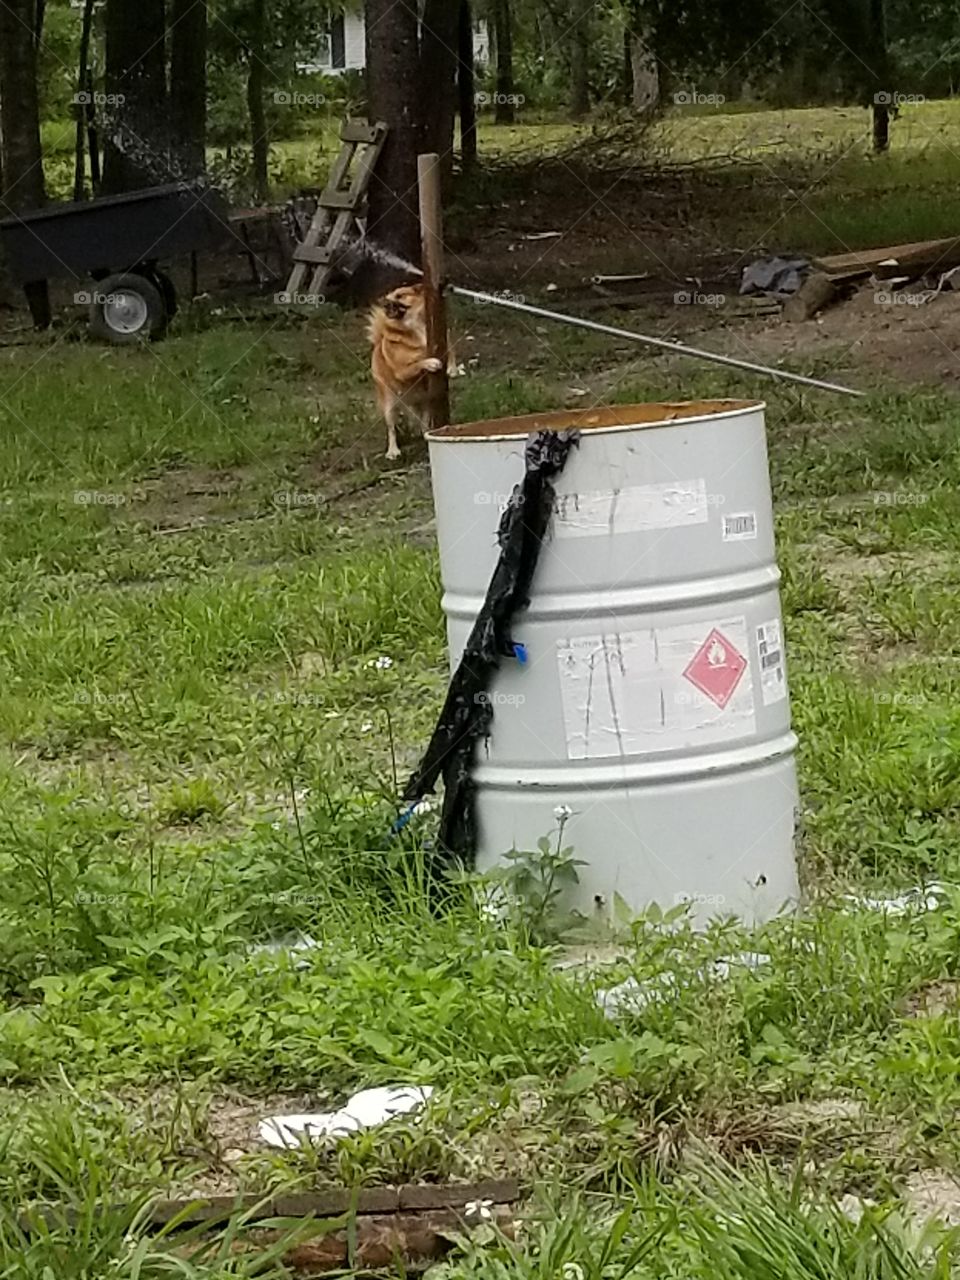 dog loves the hose